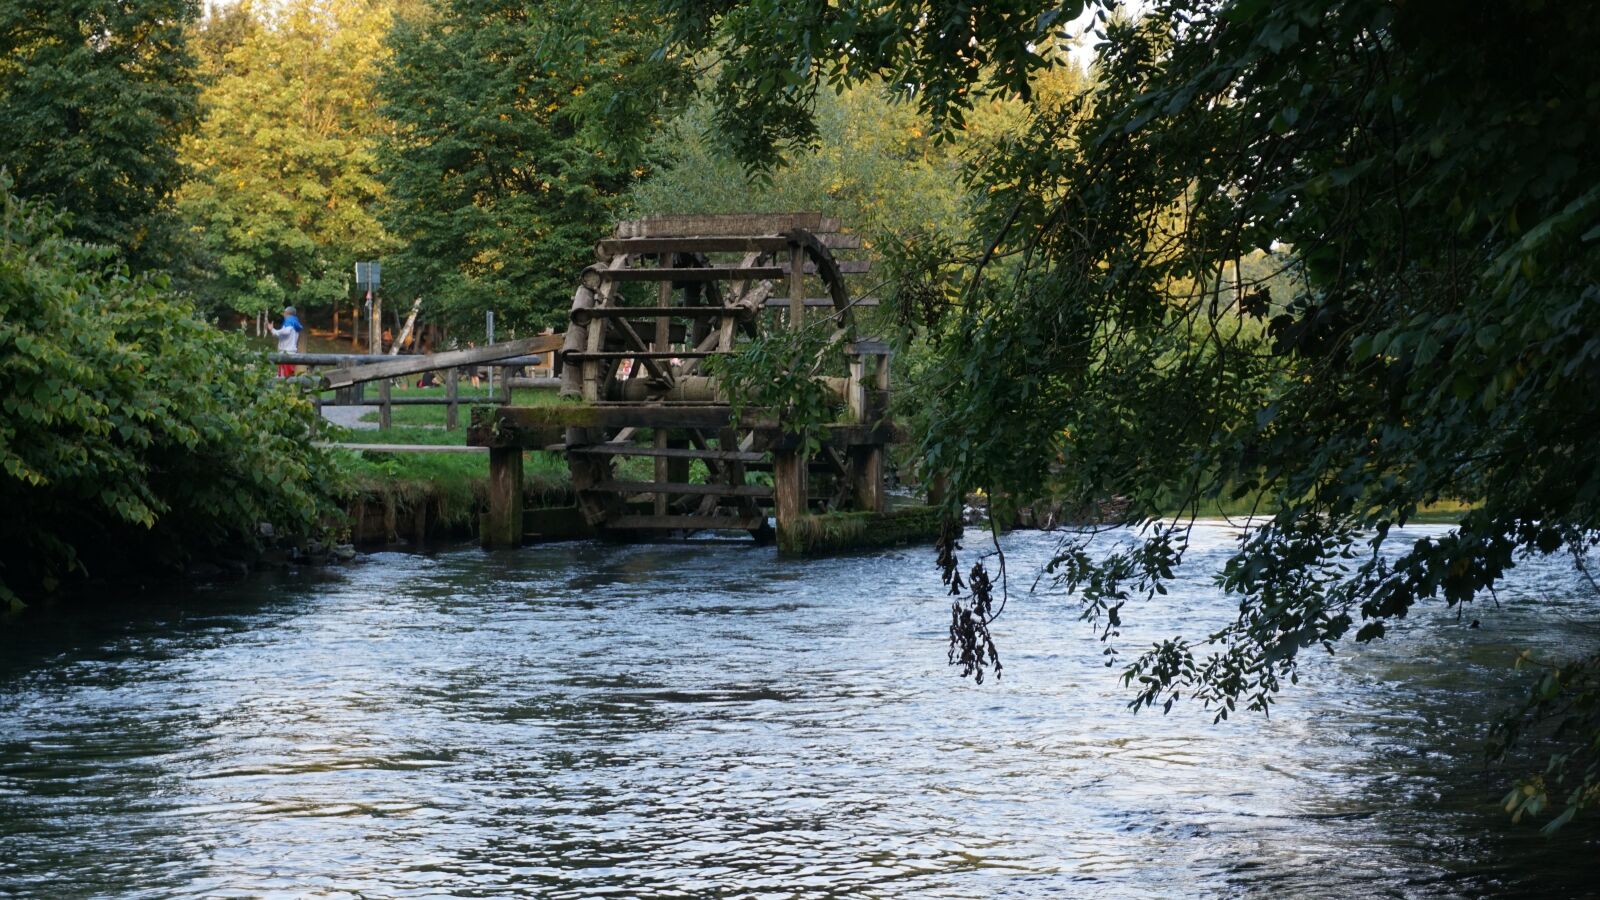 Мельница на реке Пегниц